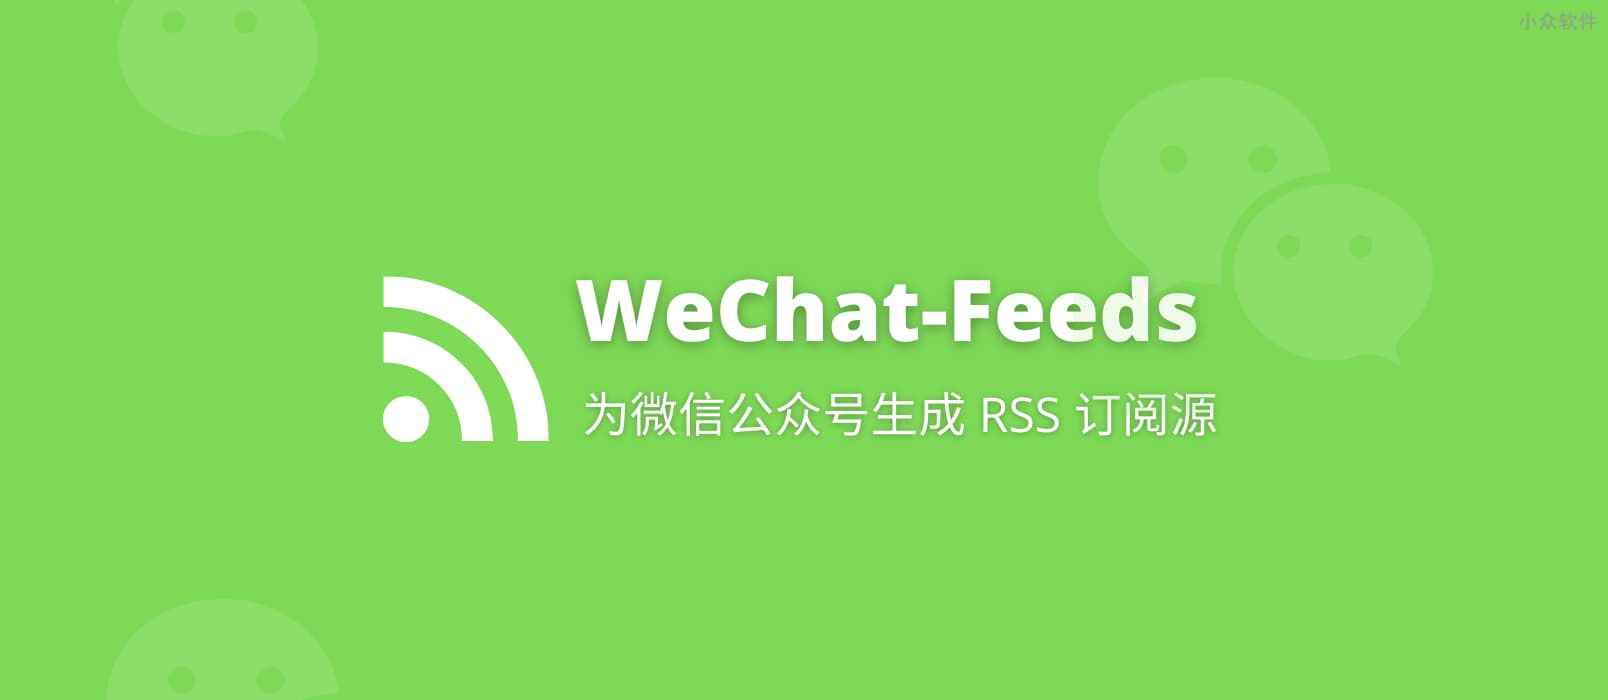 WeChat-Feeds – 为微信公众号生成 RSS 订阅源